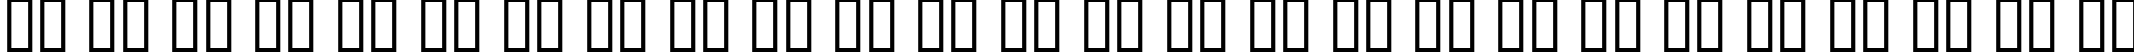 Пример написания английского алфавита шрифтом RozenDecor